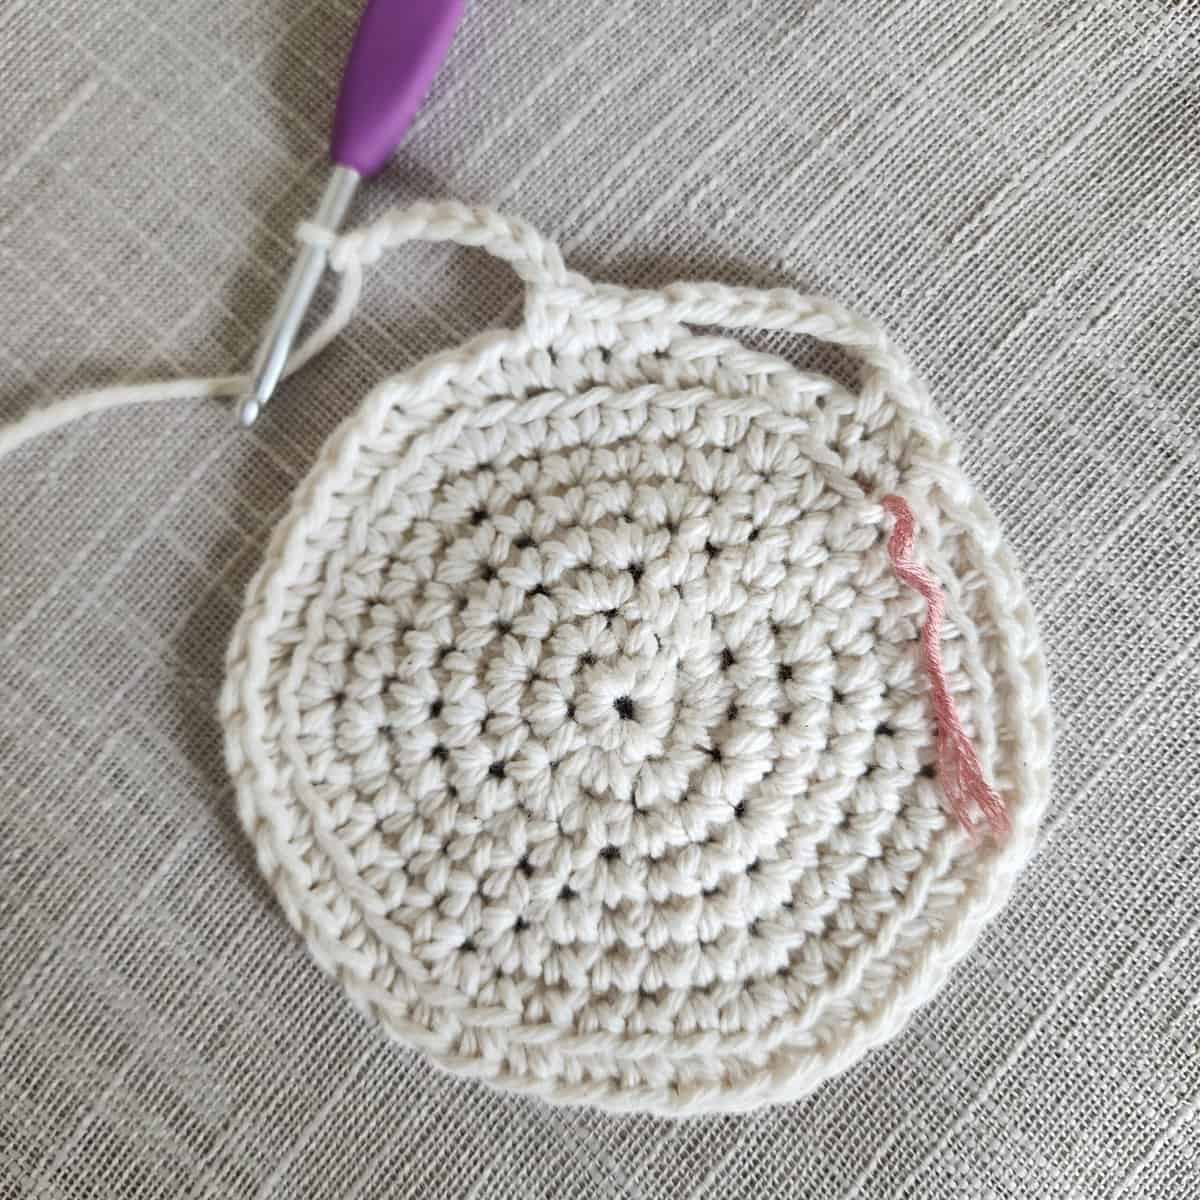 Small crochet circle with purple crochet hook.